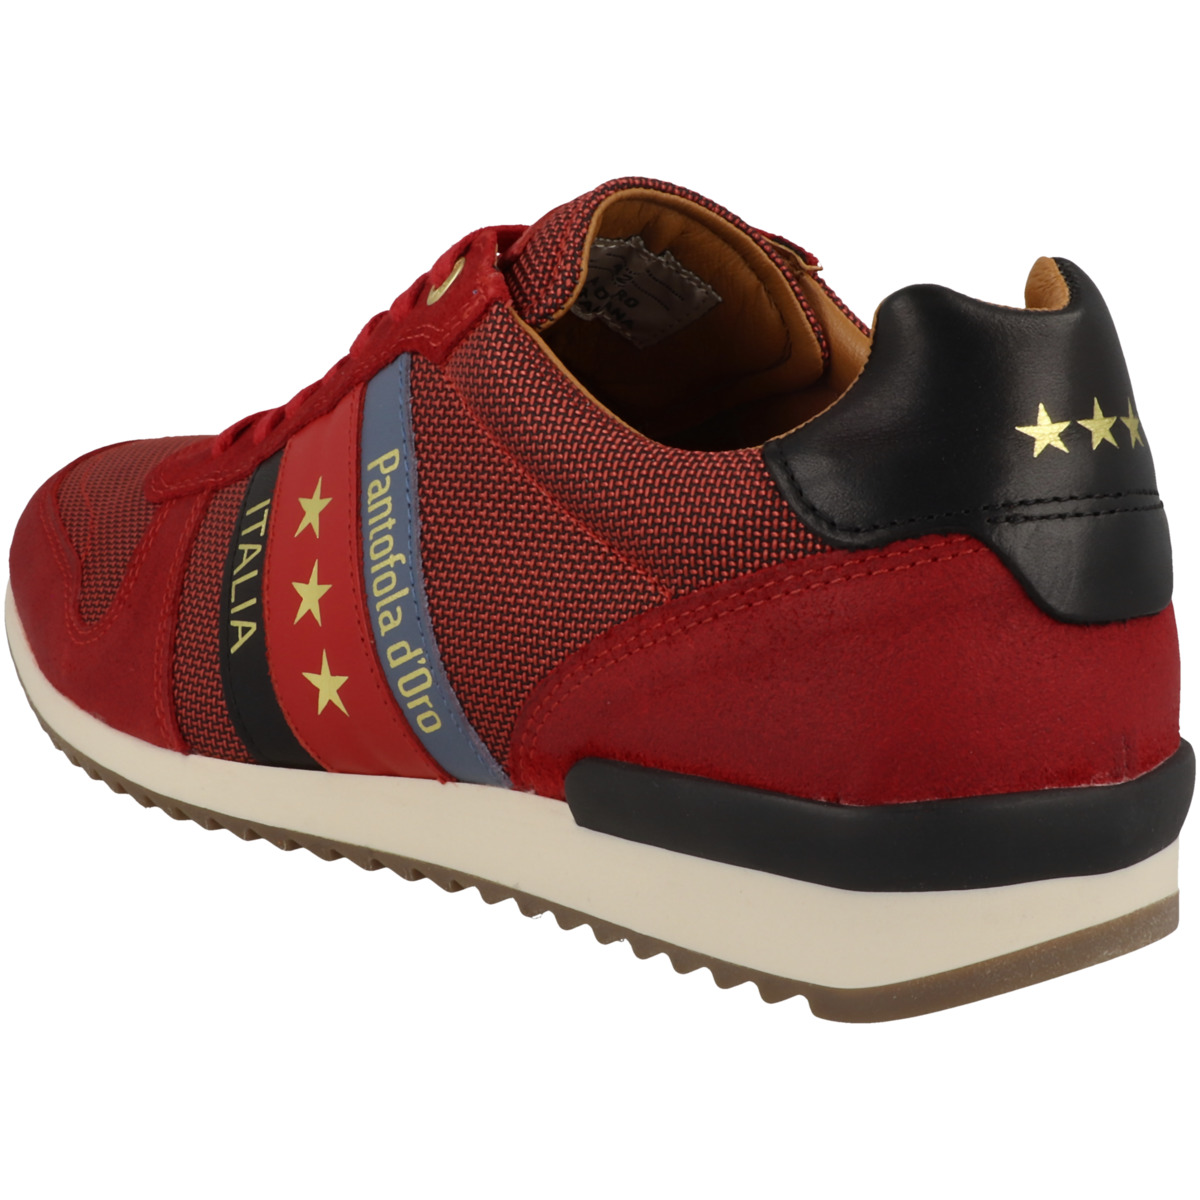 Pantofola d Oro Rizza N Uomo Low Sneaker rot